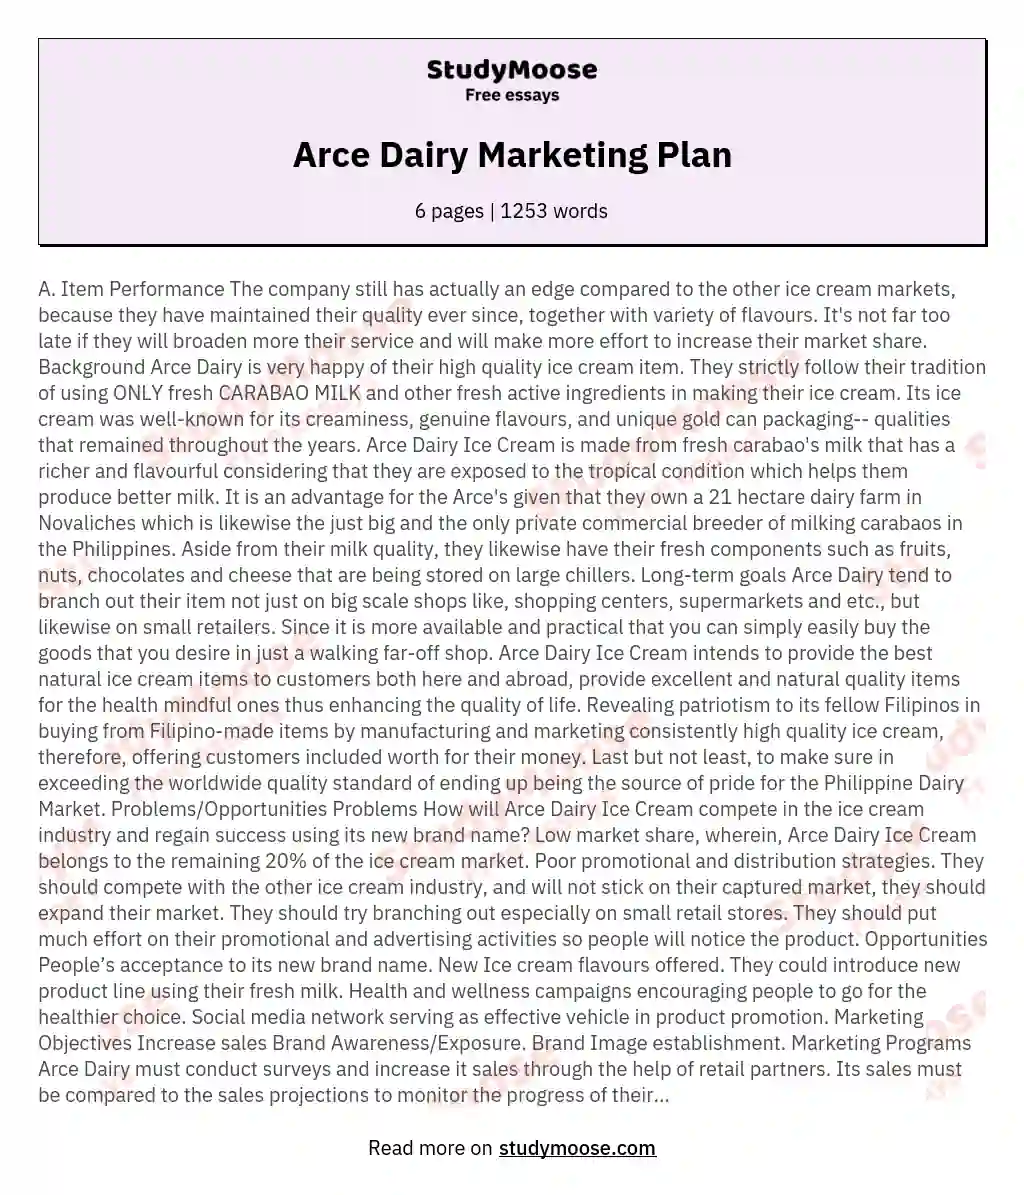 Arce Dairy Marketing Plan essay